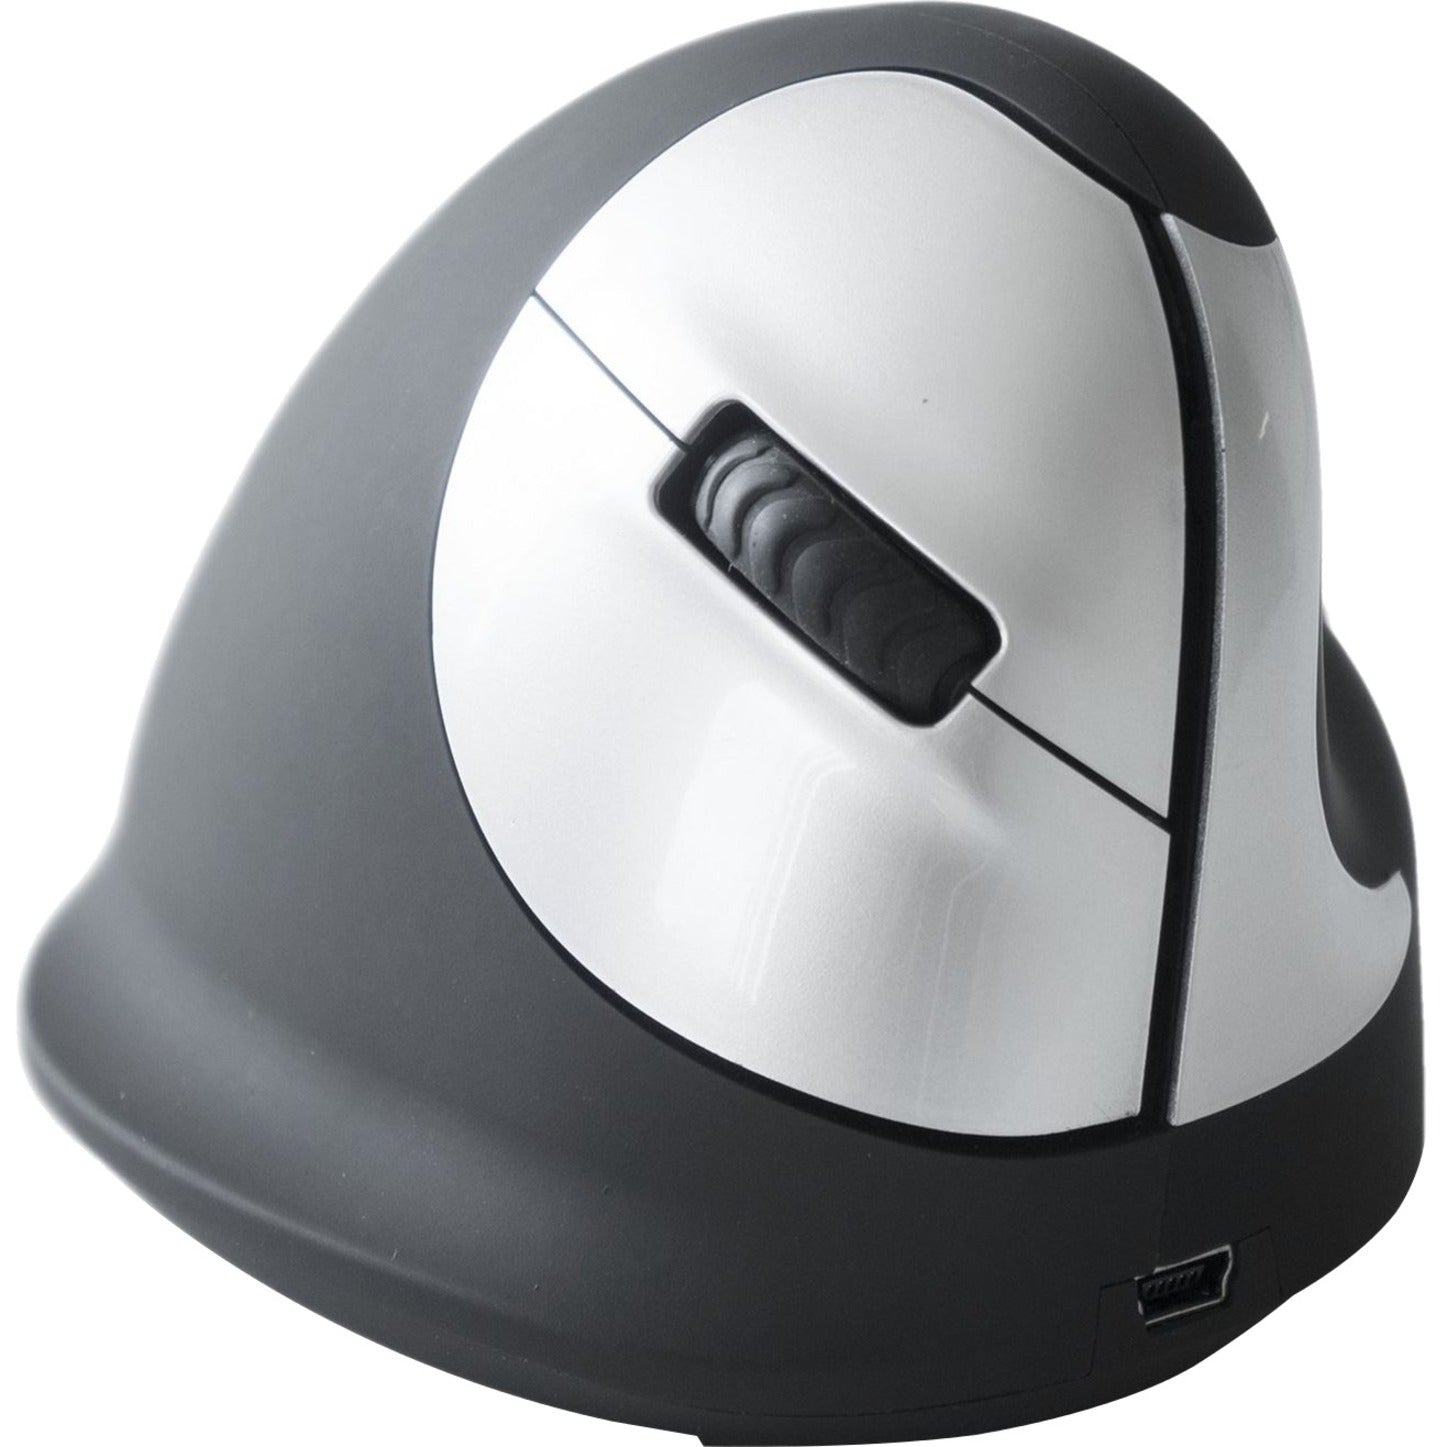 R-Go Tools Wireless Vertical Ergonomic Mouse, Medium, Right Hand, Black (RGOHEWL) Main image